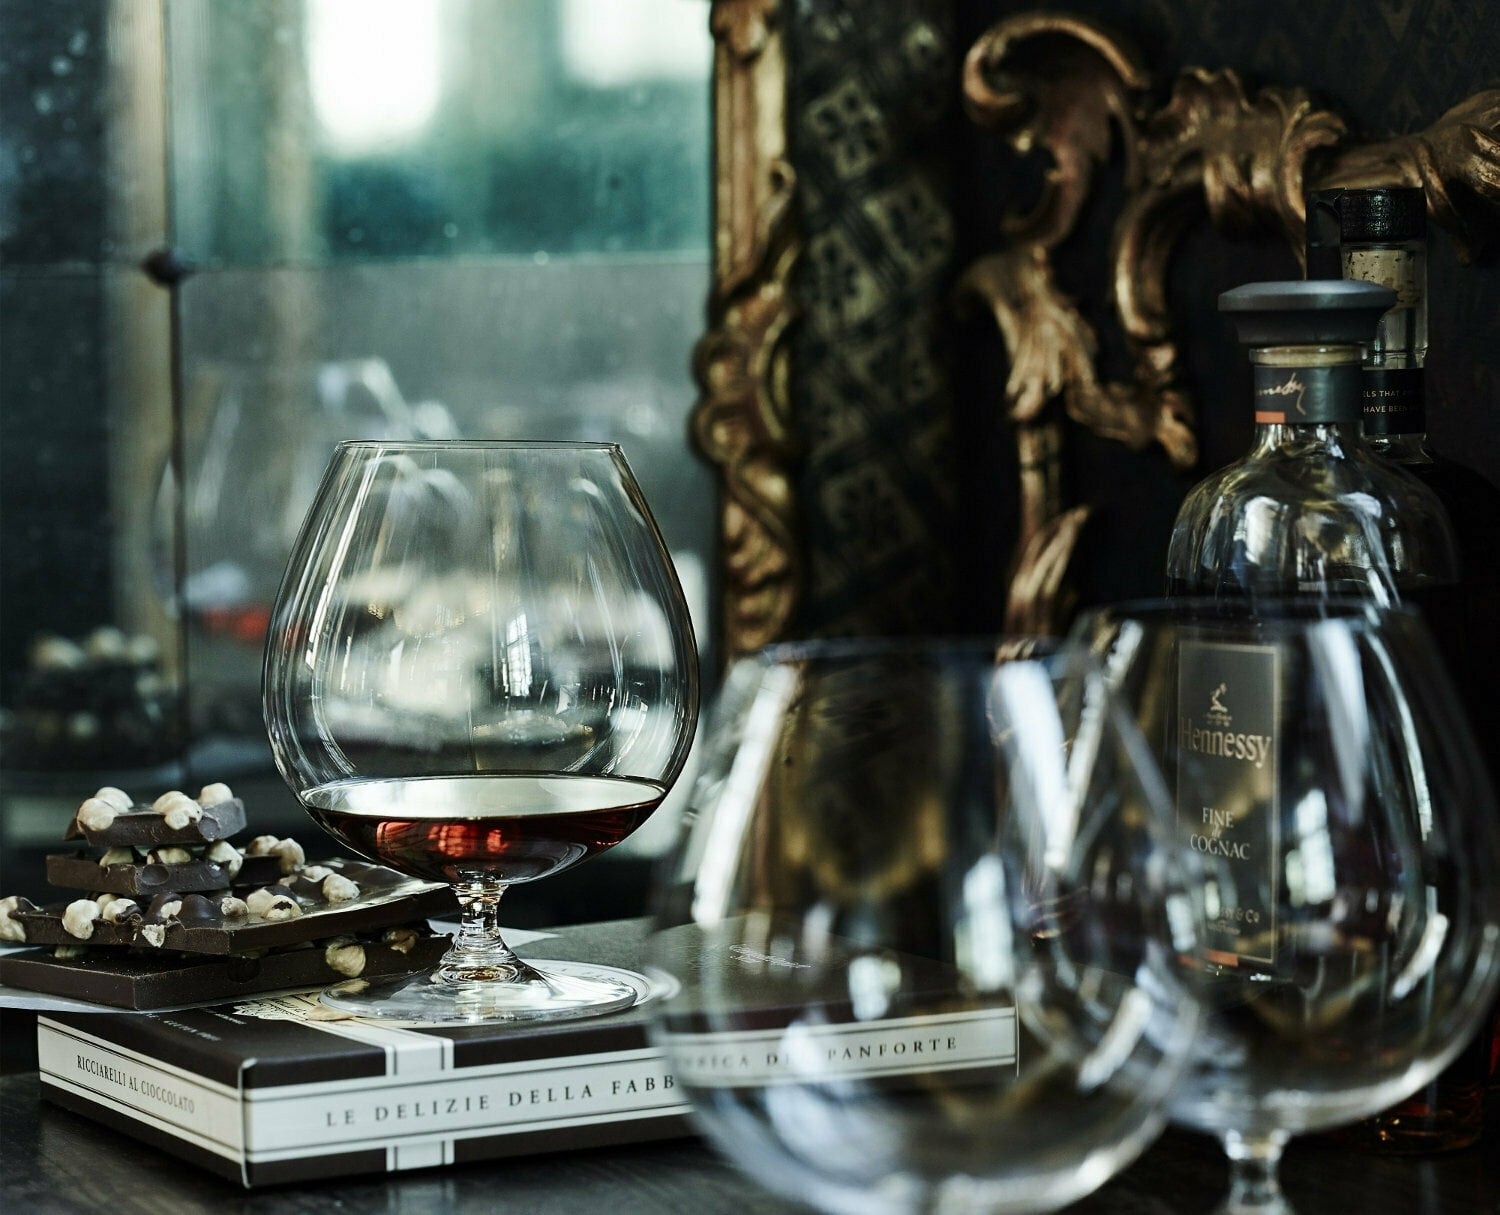 Riedel Vinum Martini Glasses (Set of 4) with Pourer & Polishing Cloth - Bed  Bath & Beyond - 31001051